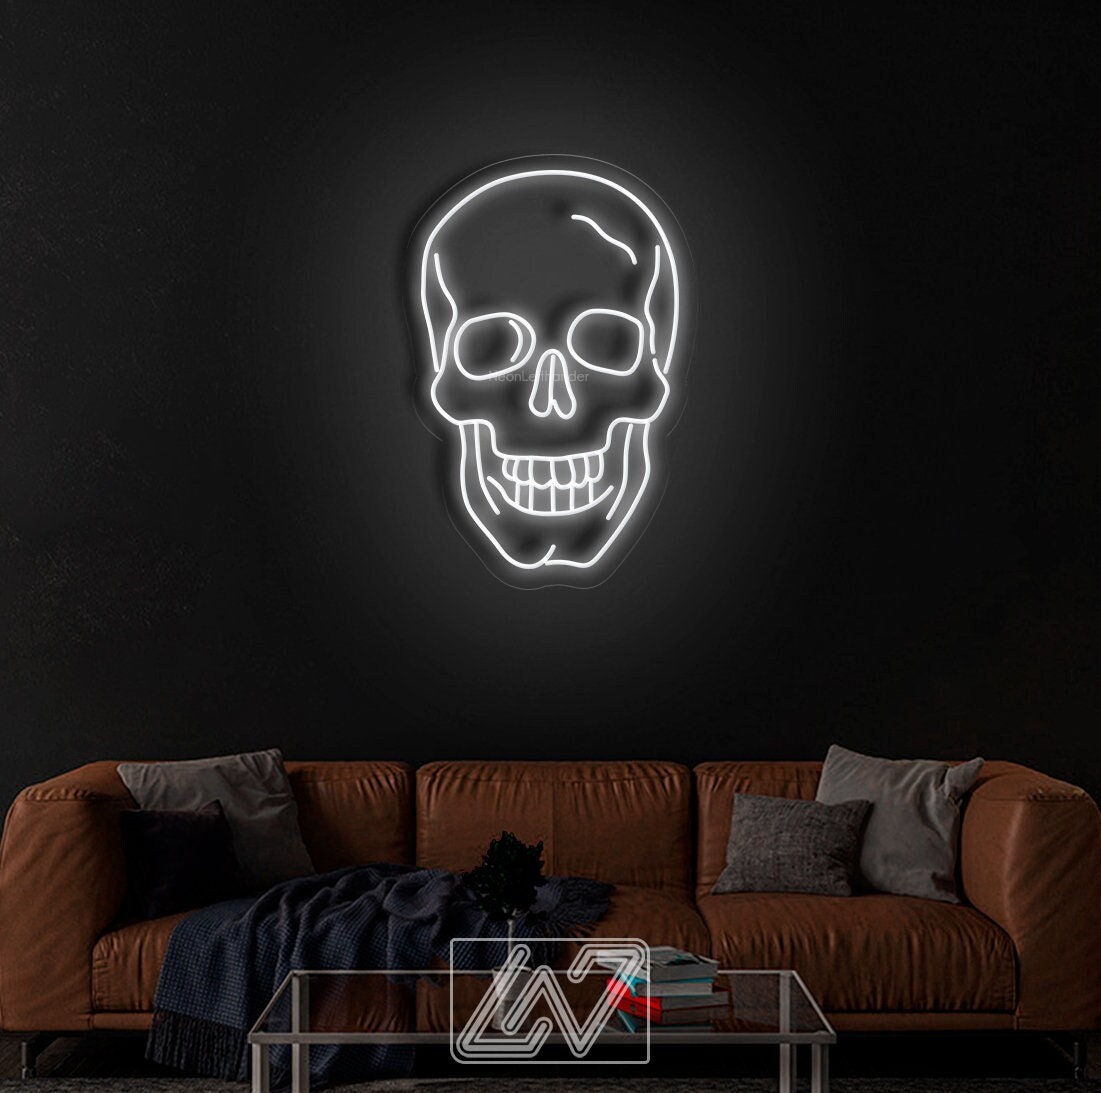 Skeleton - LED Neon Sign, Spooky Halloween Led Decor, Scary Halloween, Halloween Light Decor, Custom Neon Sign